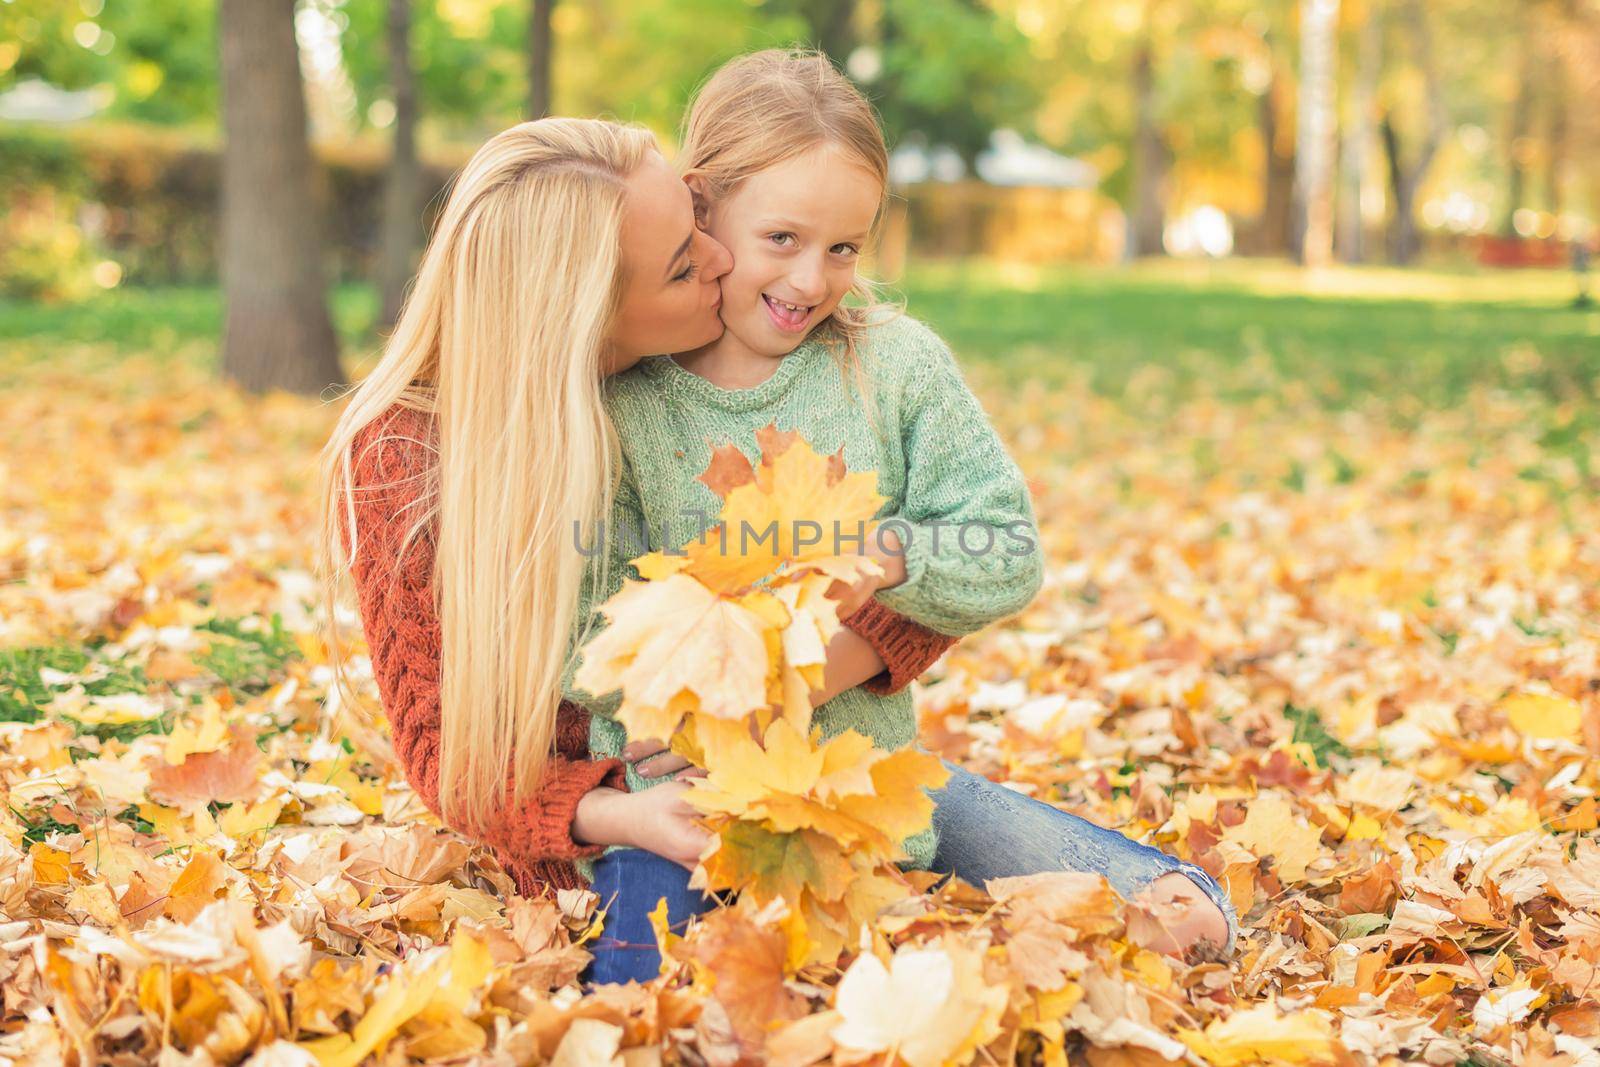 Woman and girl holding autumn yellow leaves by okskukuruza